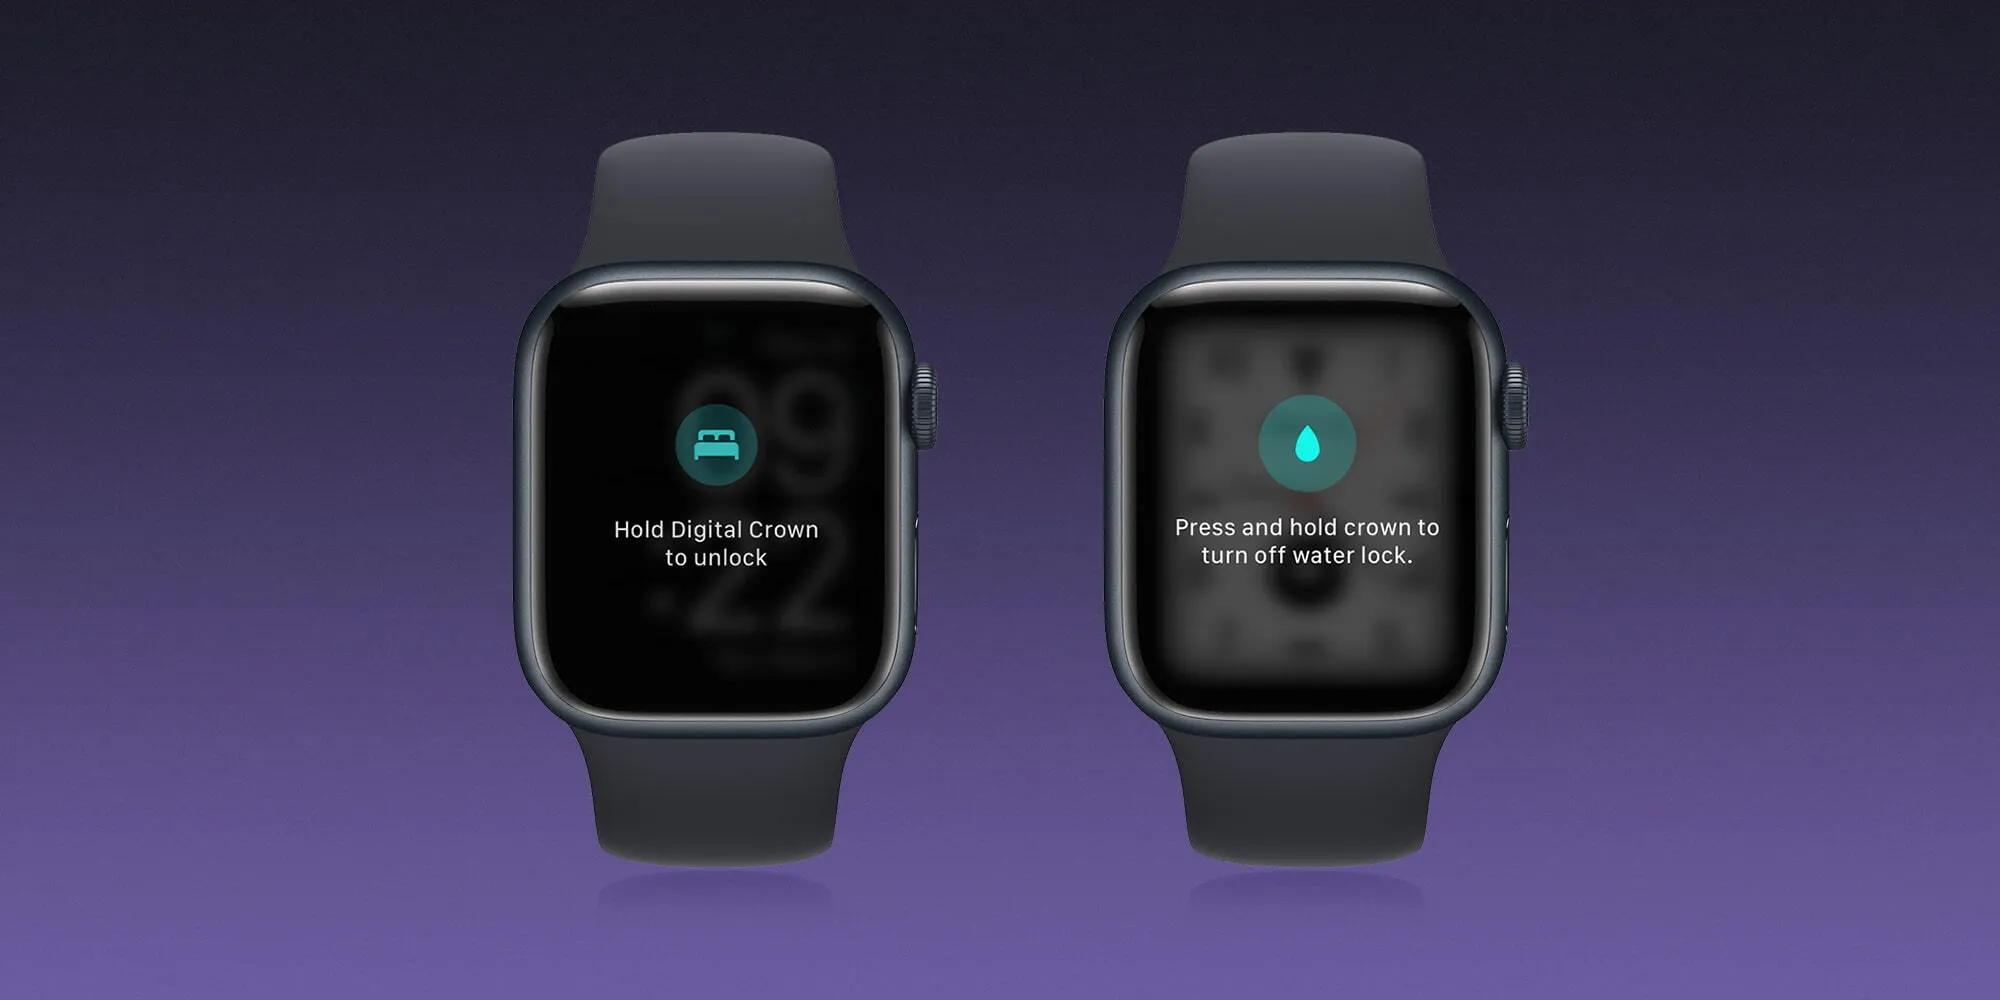 How To Turn Digital Crown Off Apple Watch